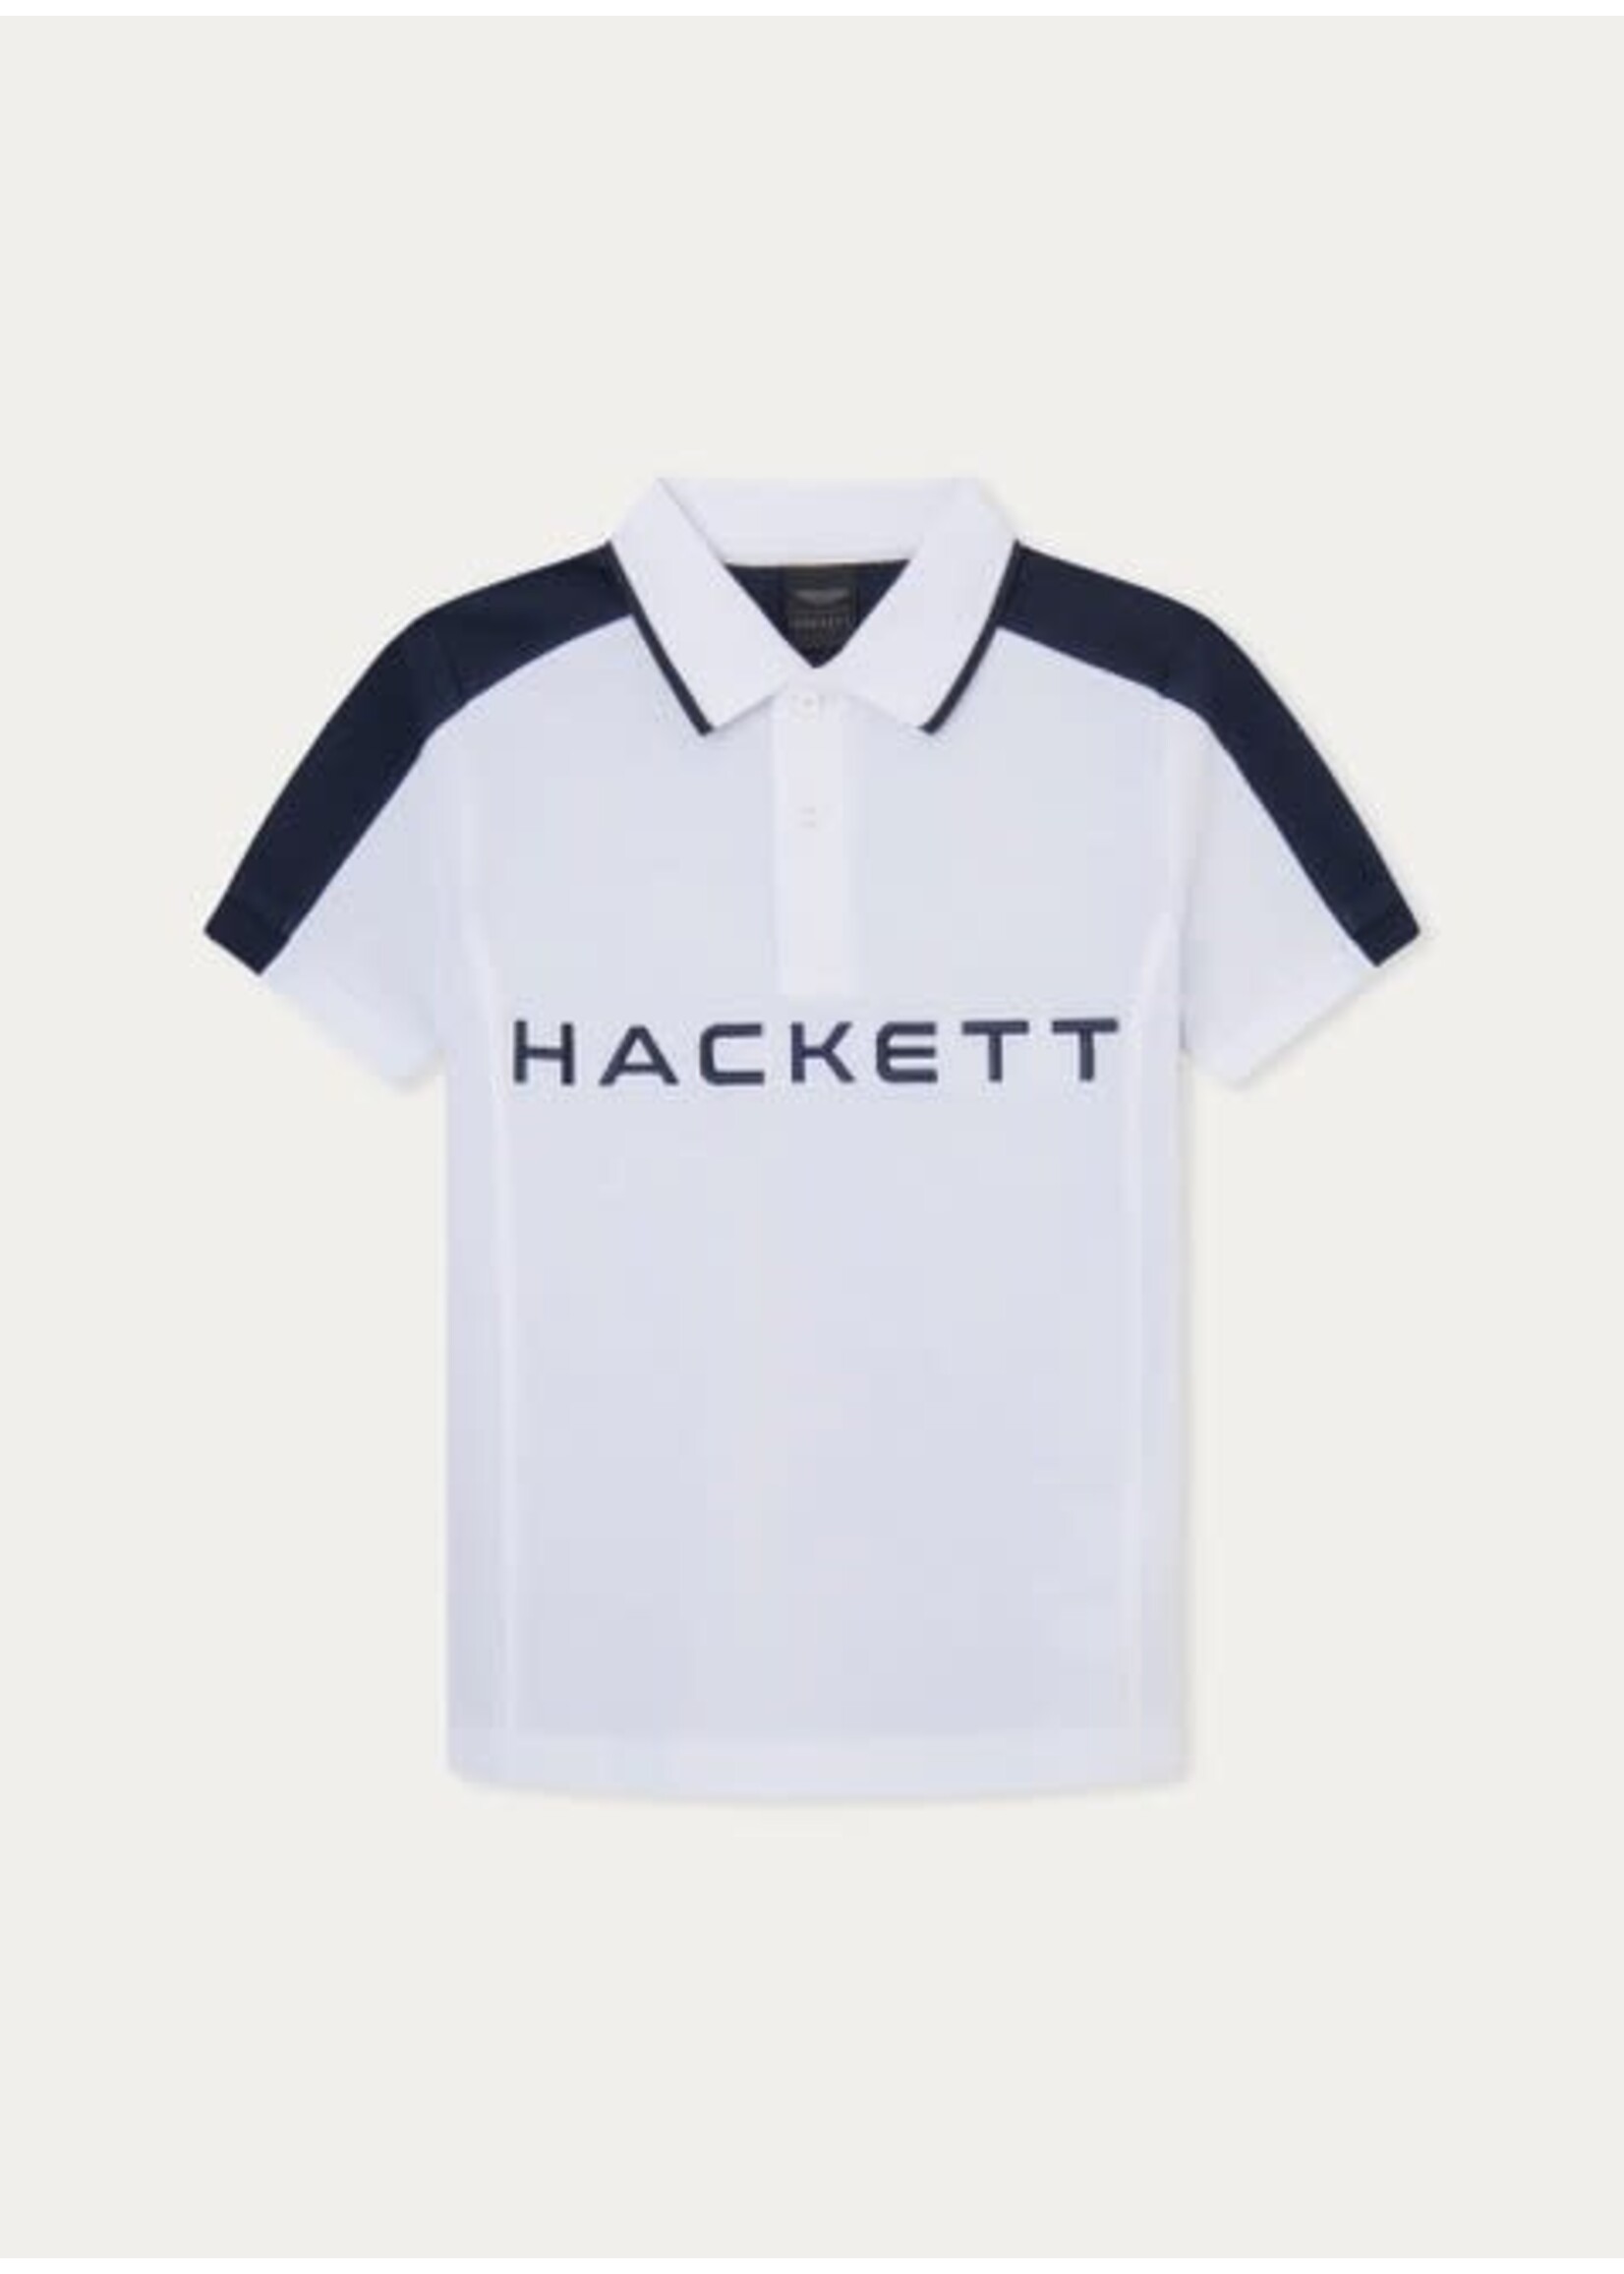 Hackett HS HACKETT MULTI 800WHITE - HK561567